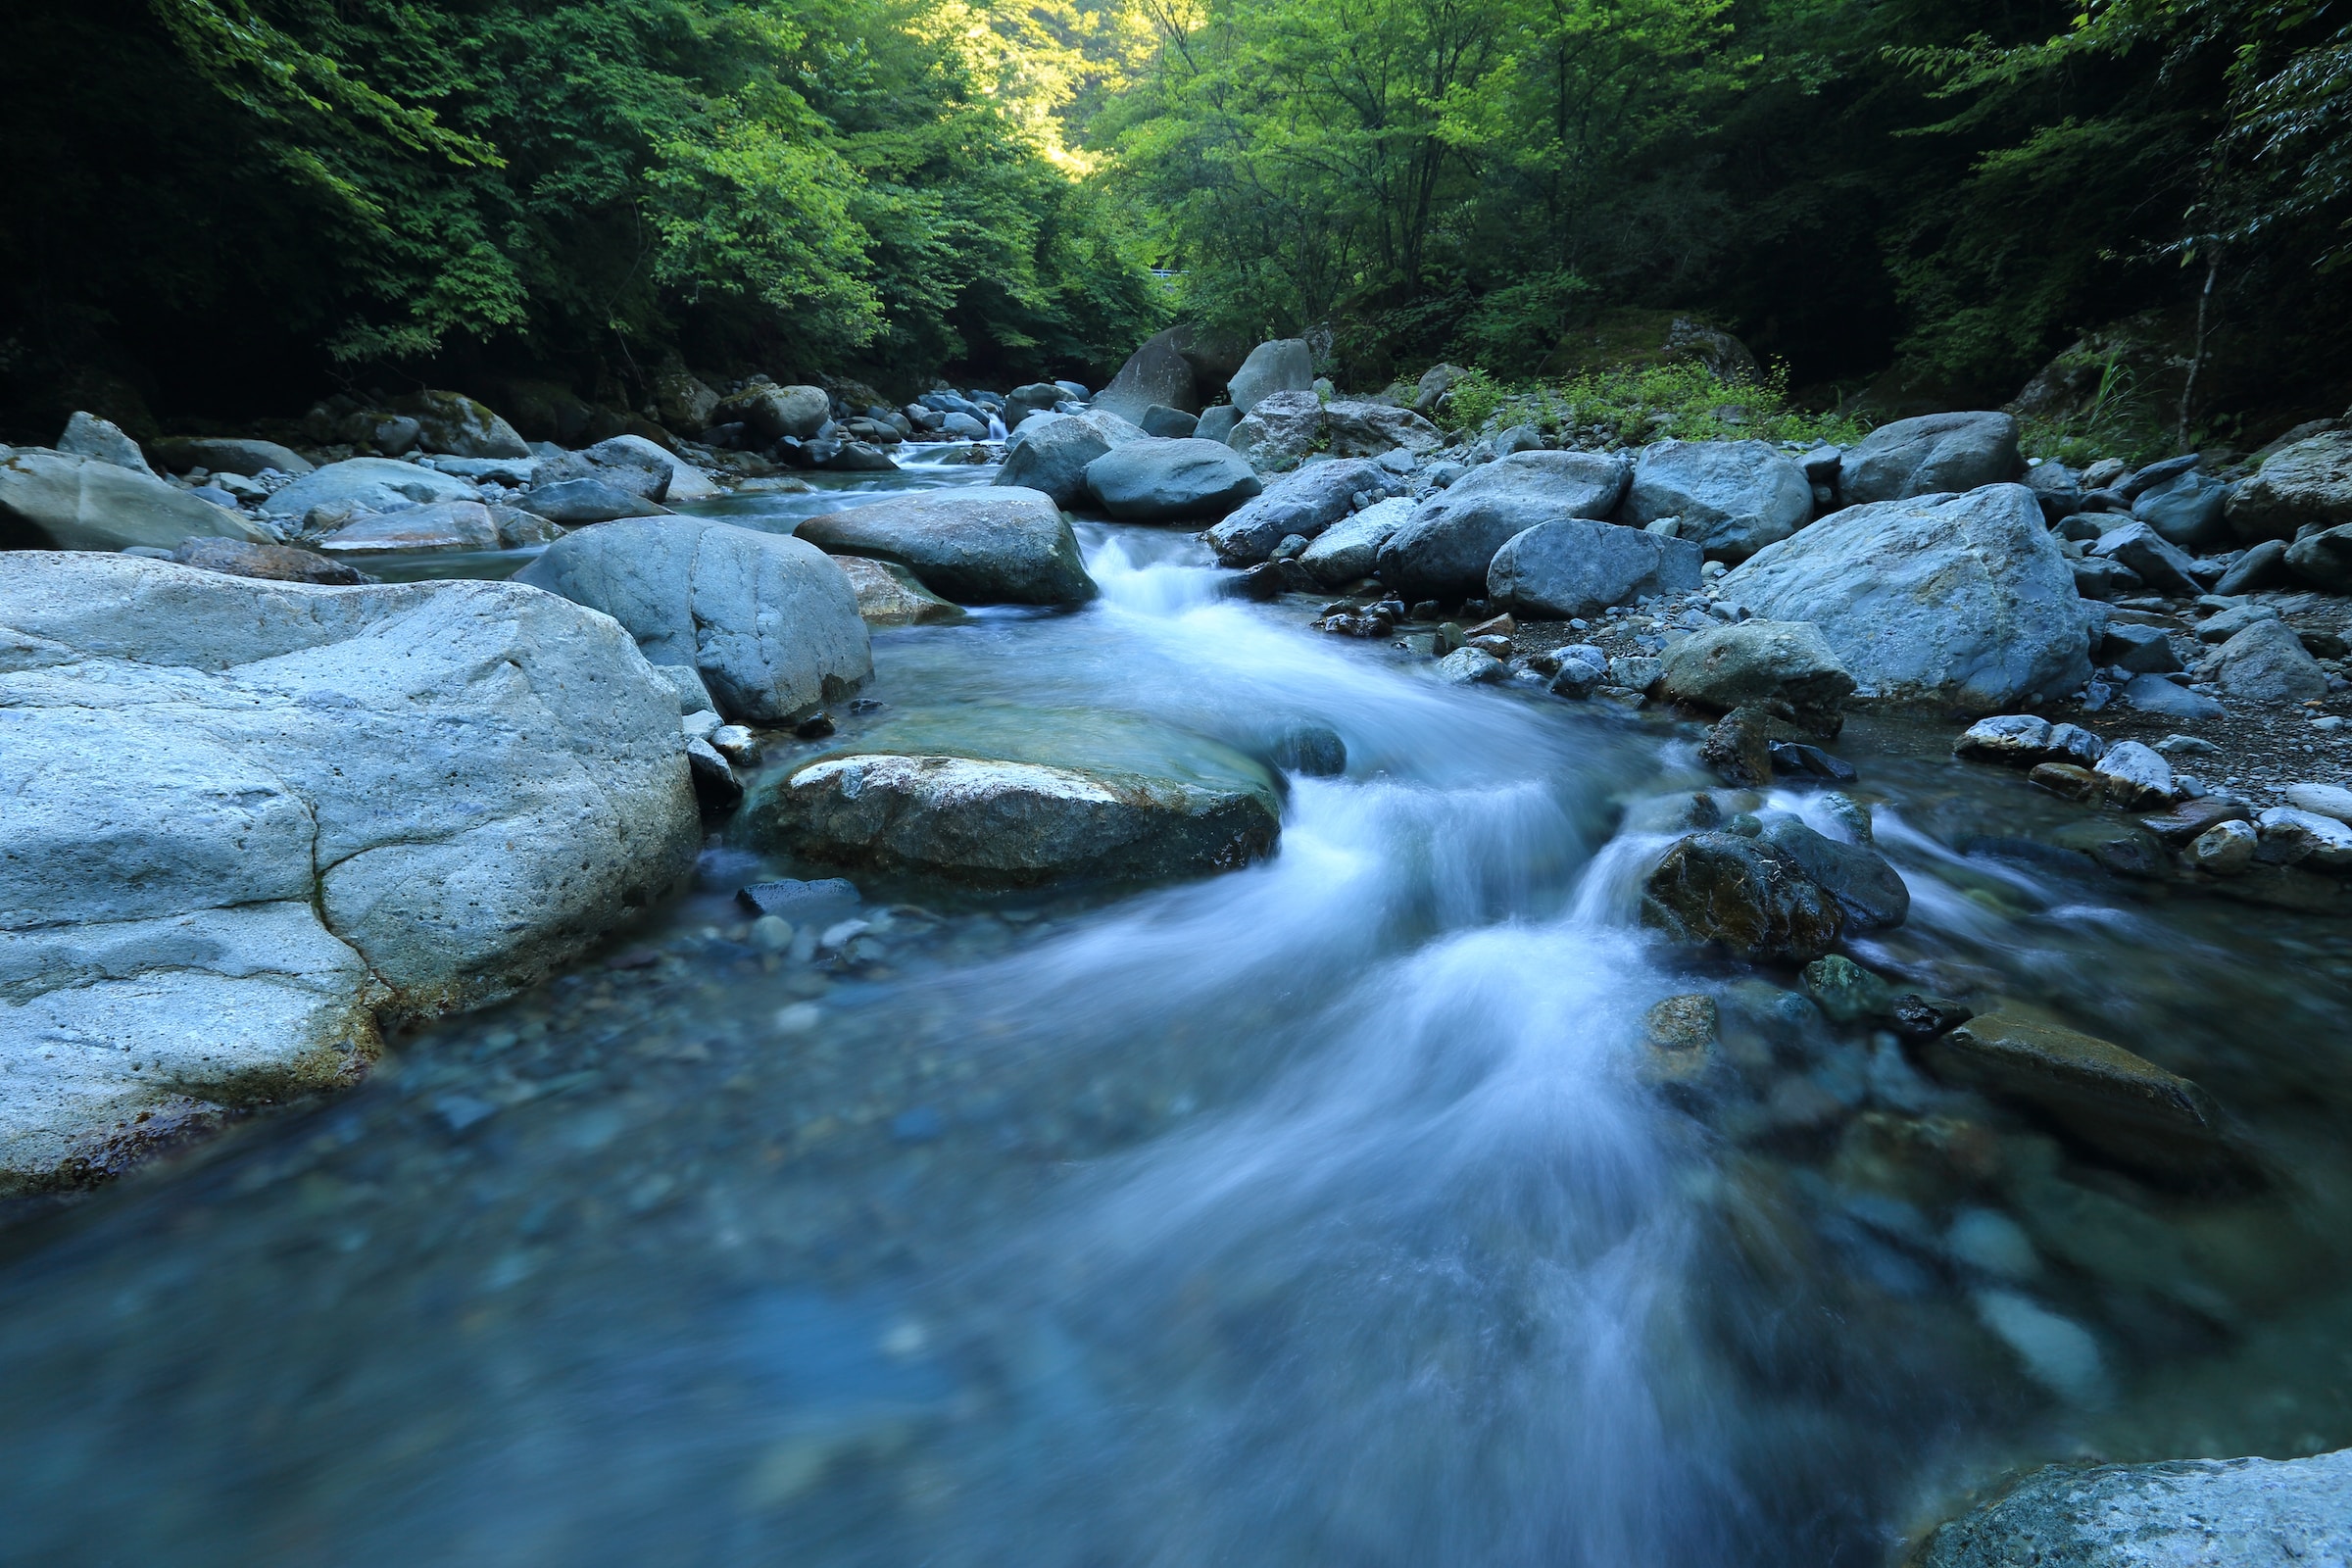 Fast flowing stream runs through rocks